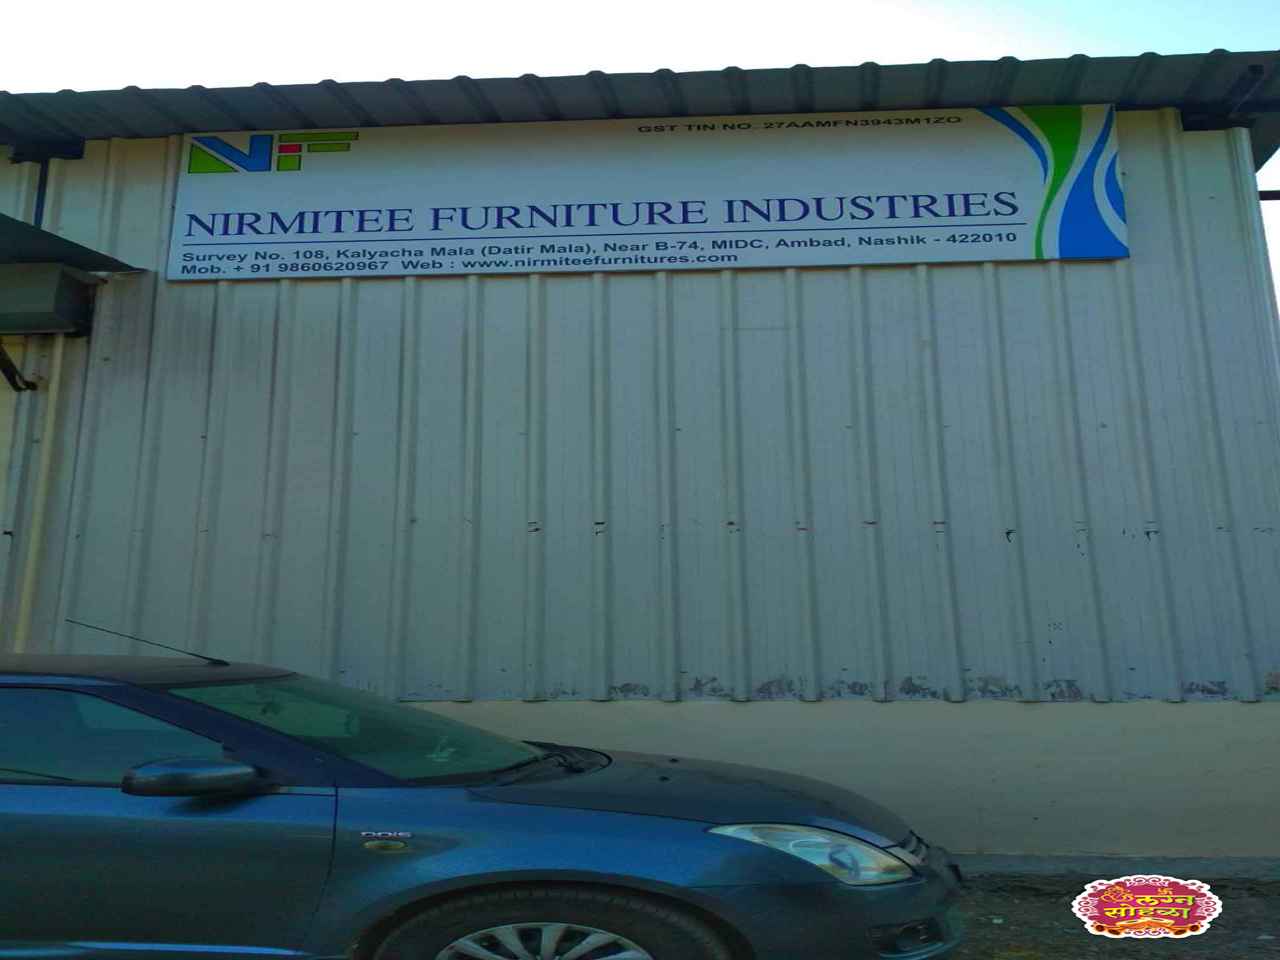 Nirmitee Furniture Industries